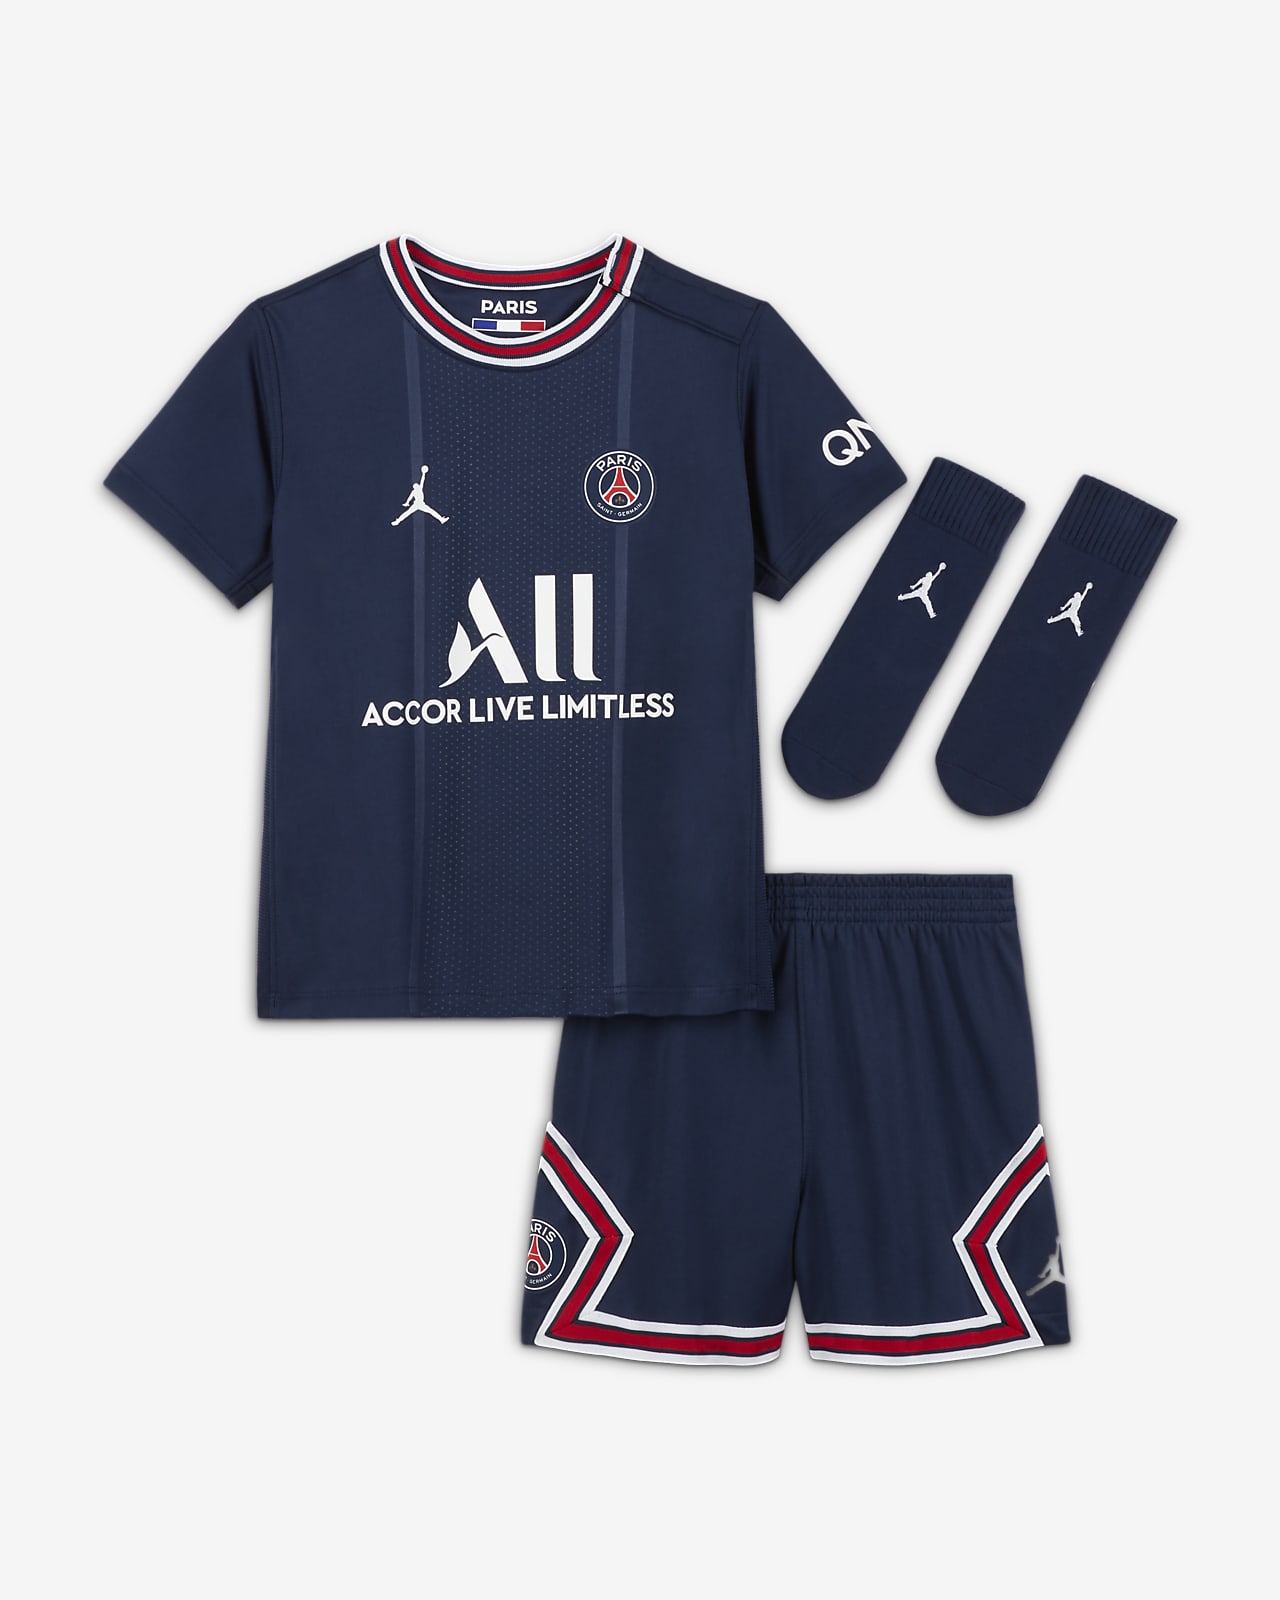 Paris Saint-Germain 2021/22 Home Baby & Toddler Football Kit